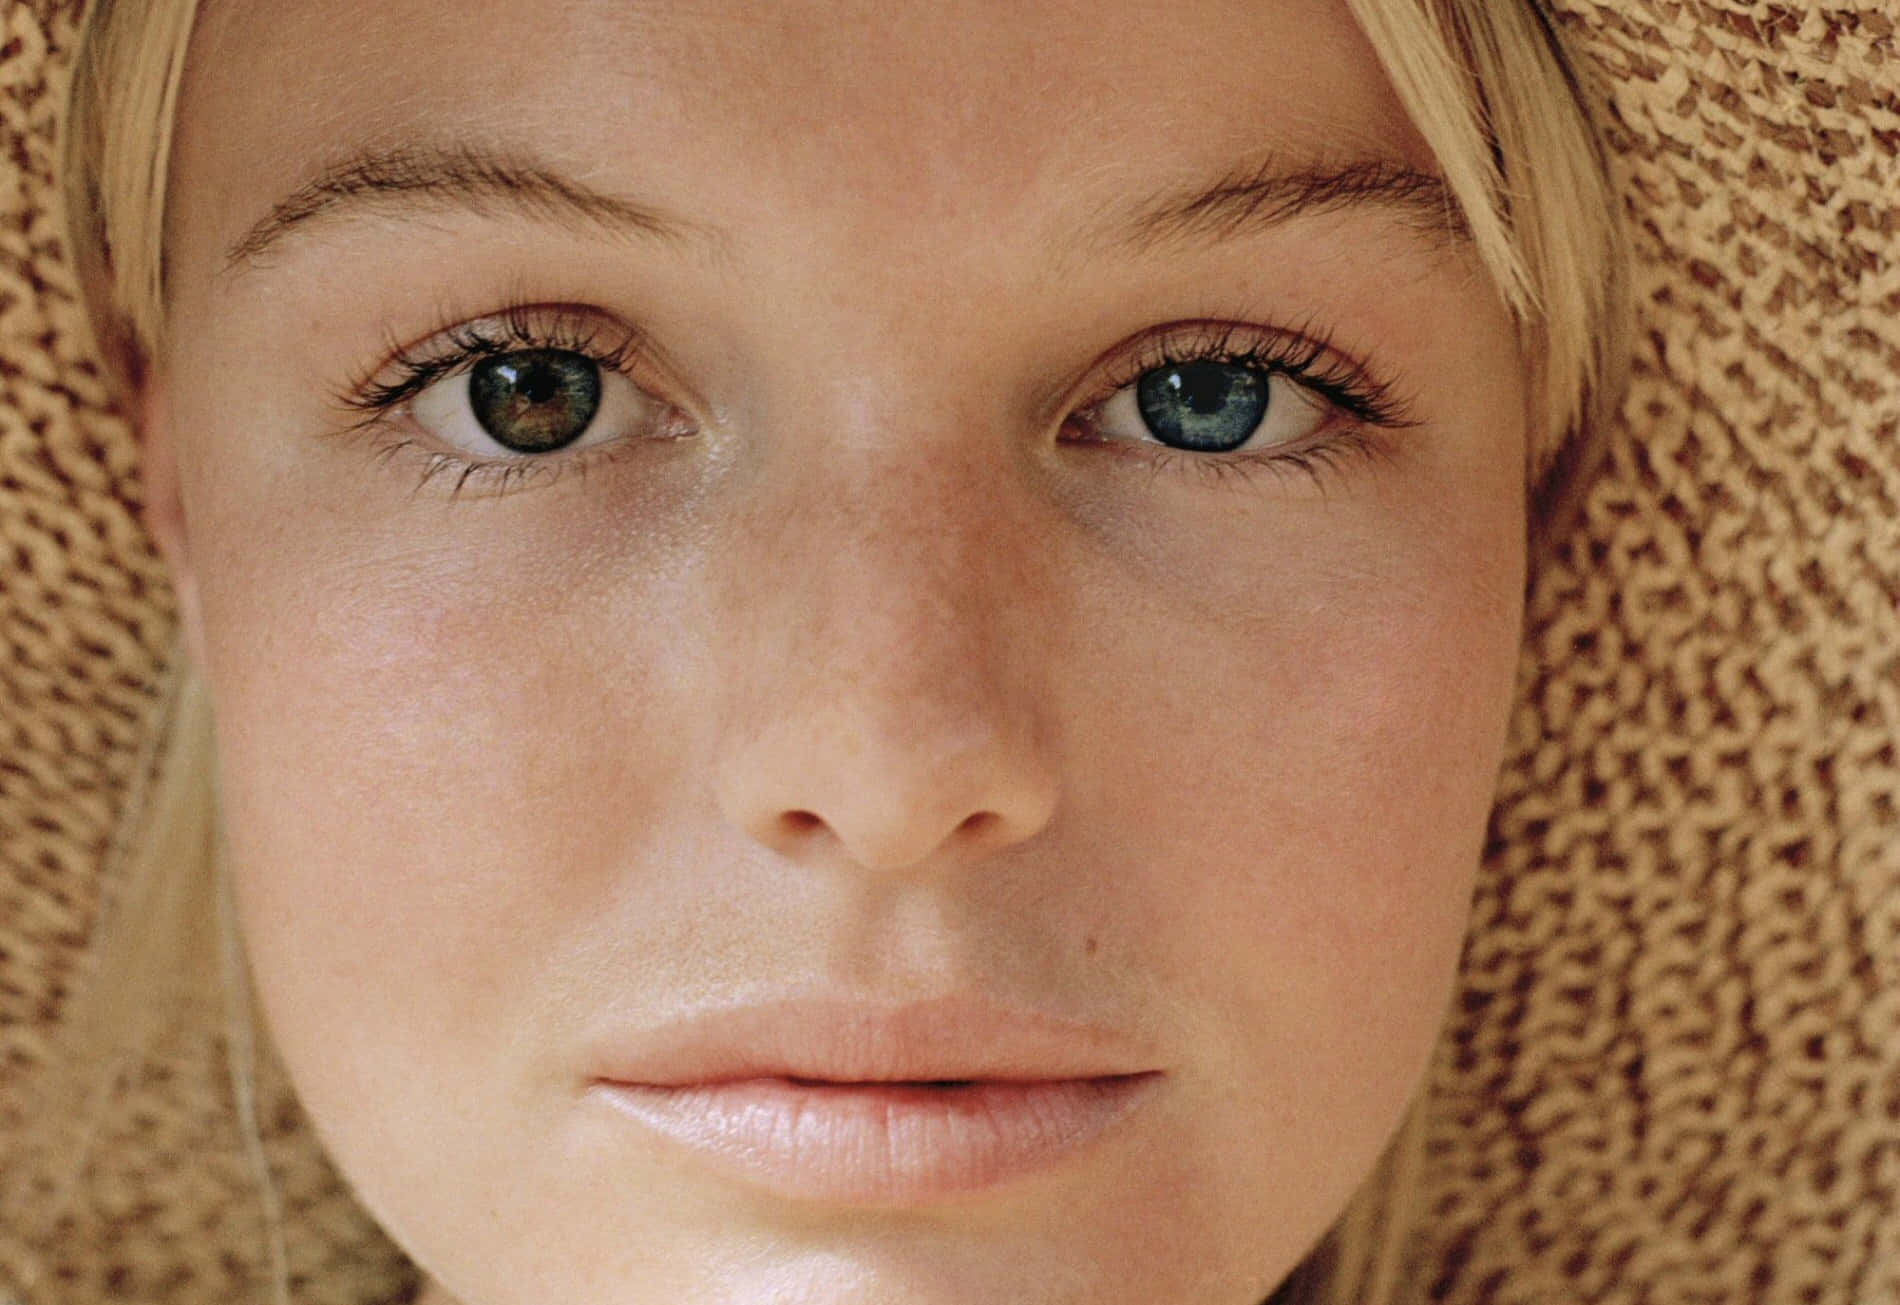 Caption: Kate Bosworth stunning close-up portrait Wallpaper